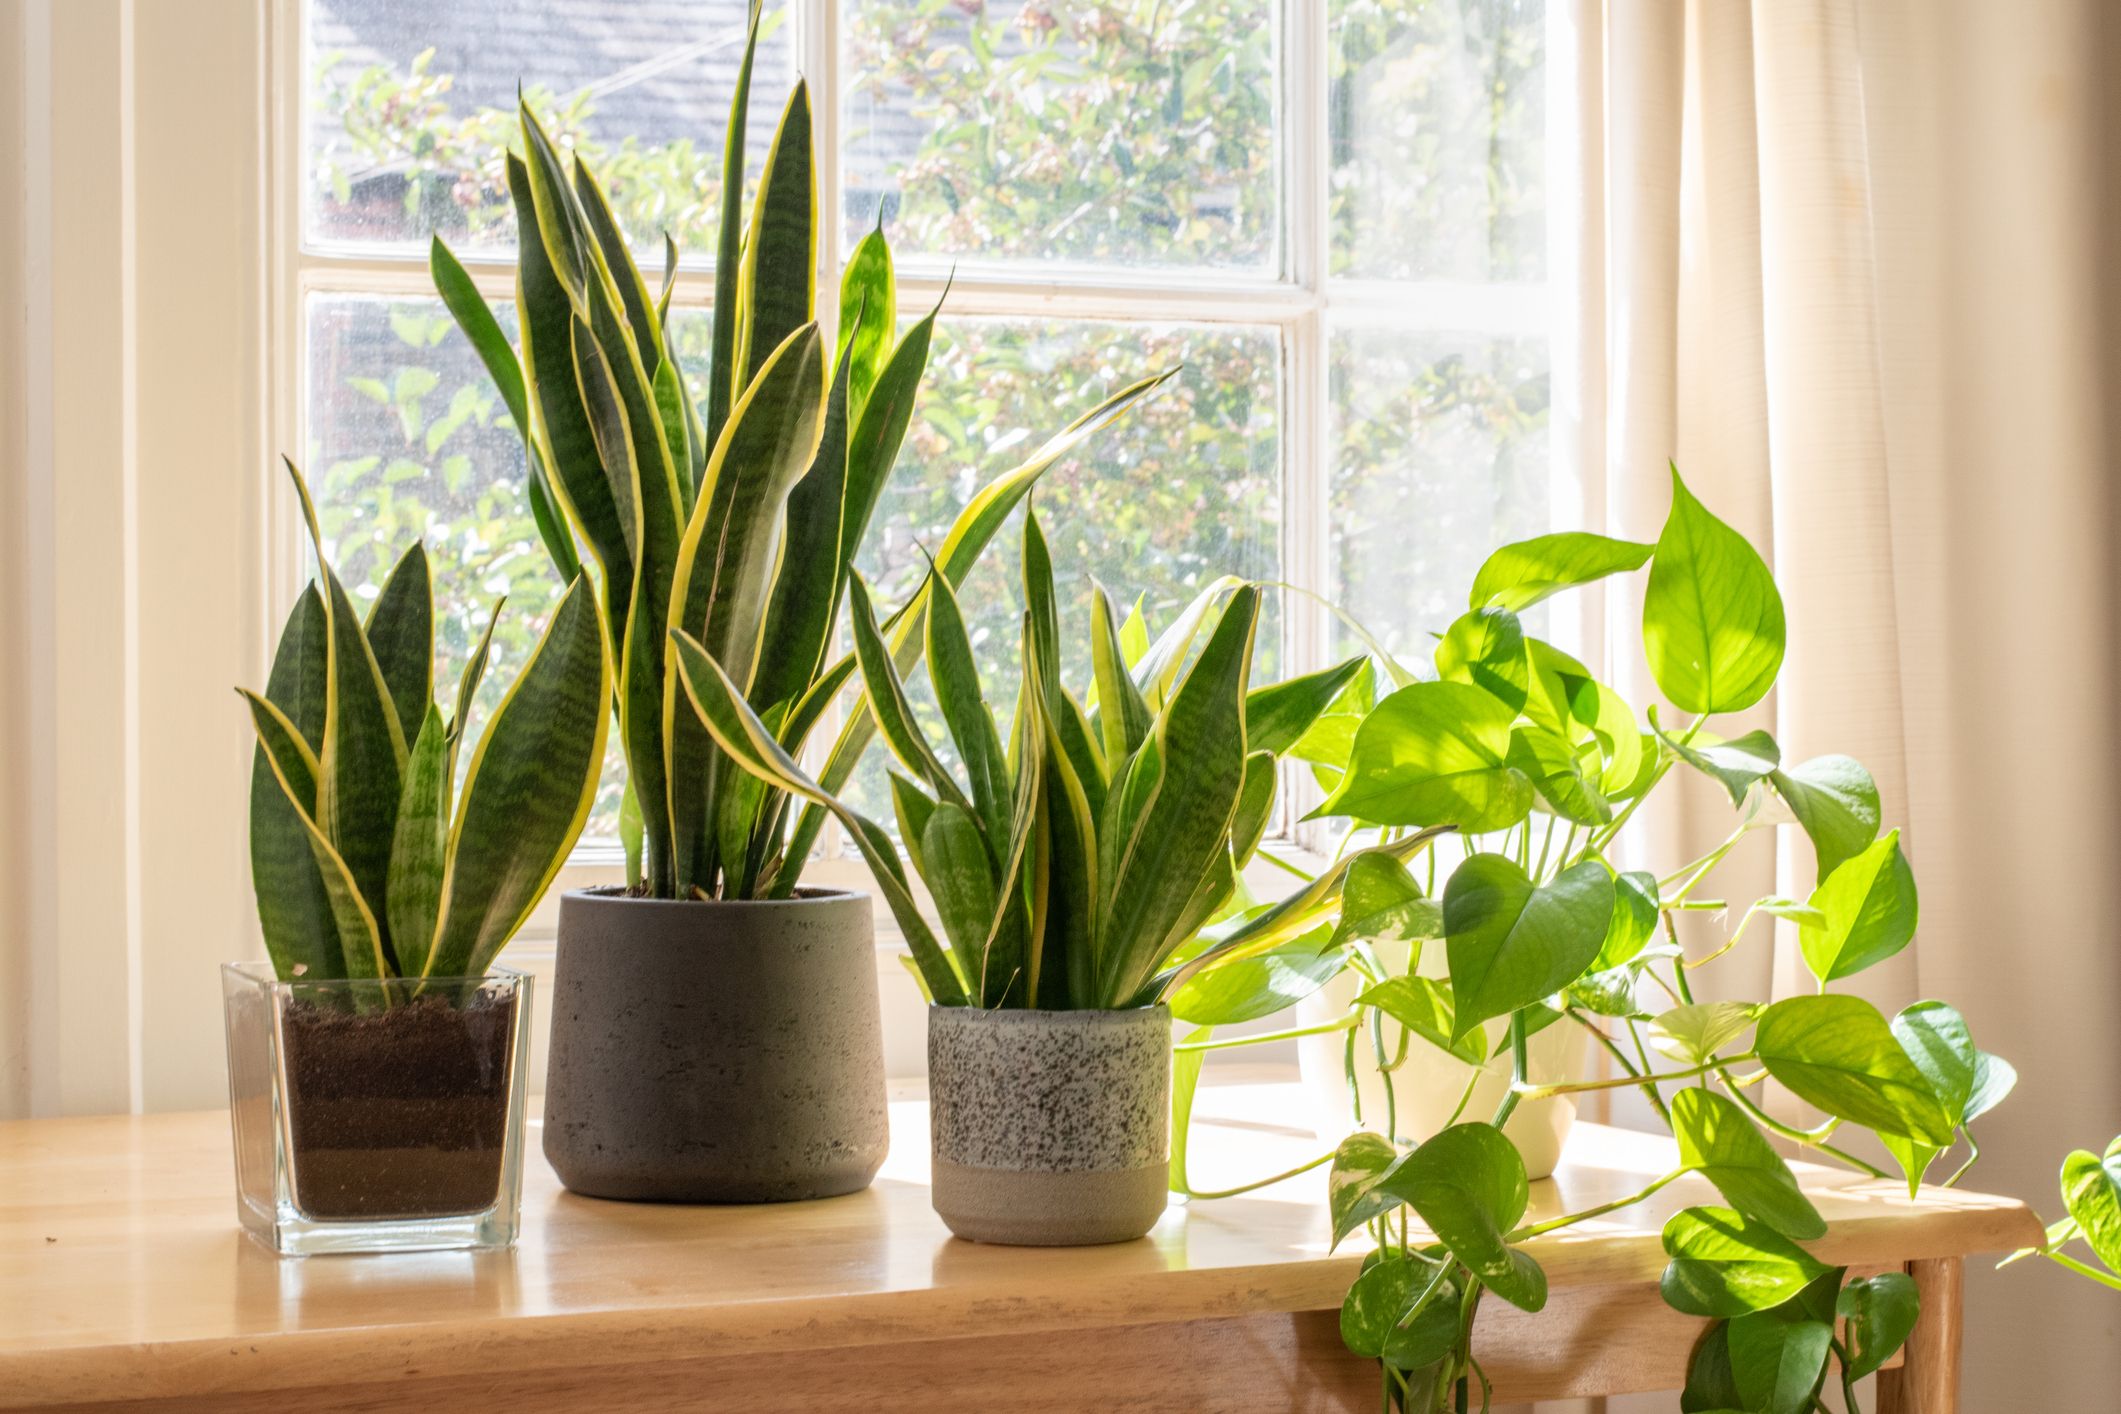 Home Decor Plants Planters - Buy Home Decor Plants Planters online in India